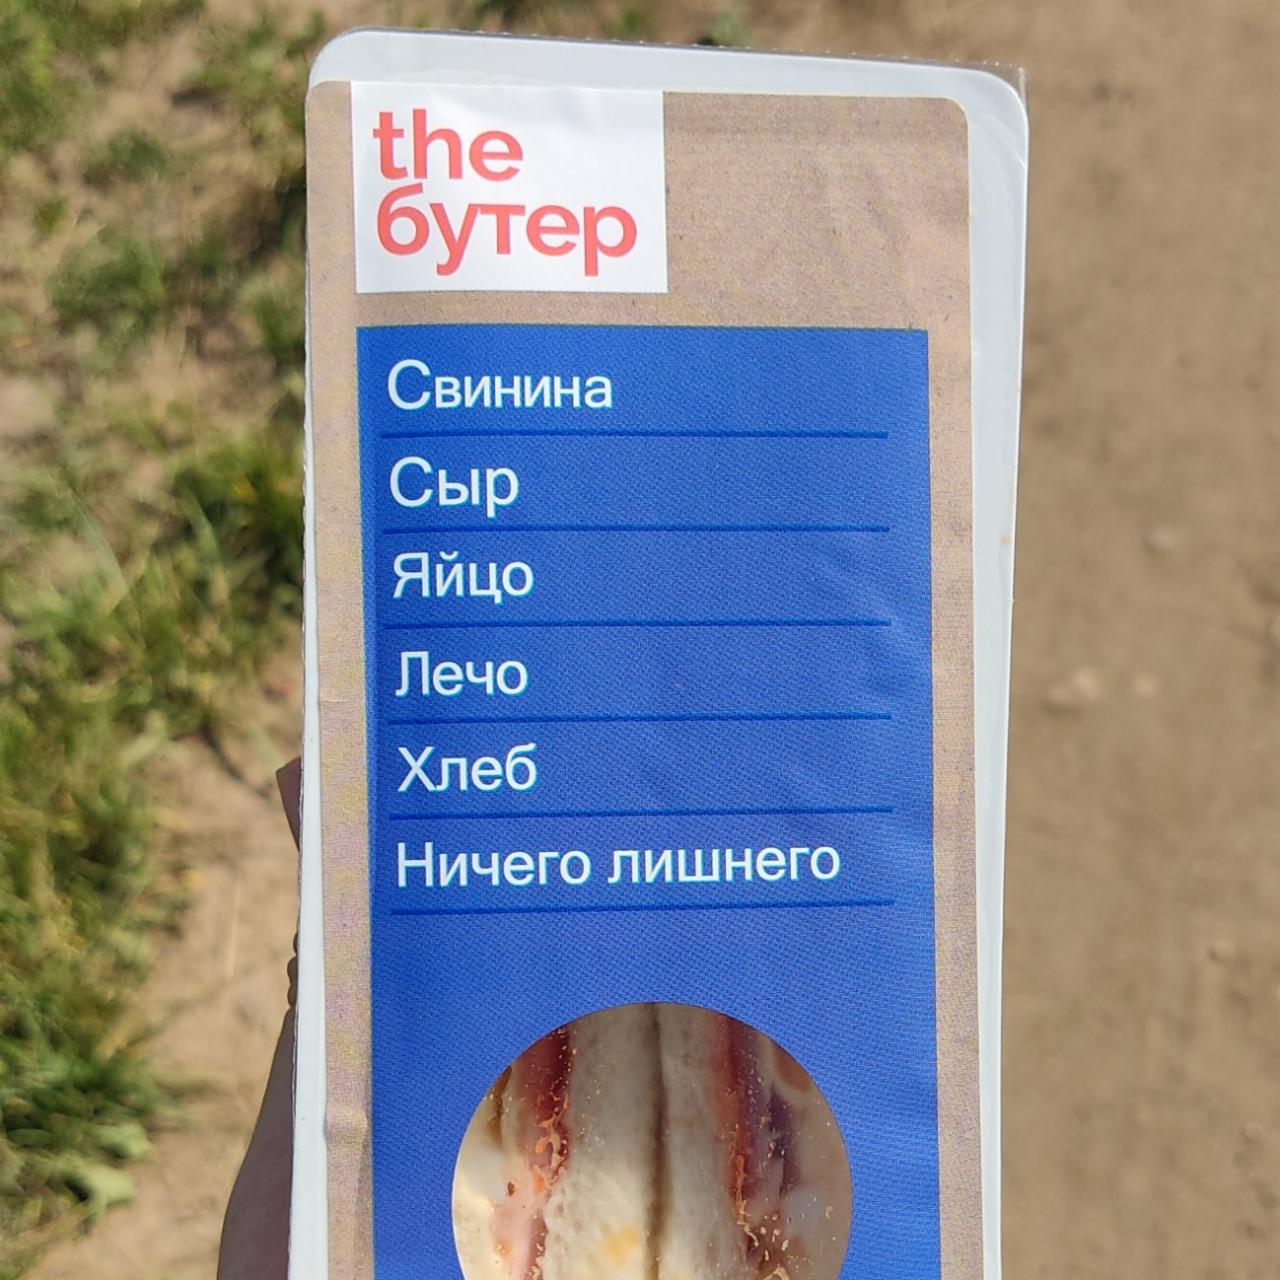 Фото - сендвич со свининой The бутер